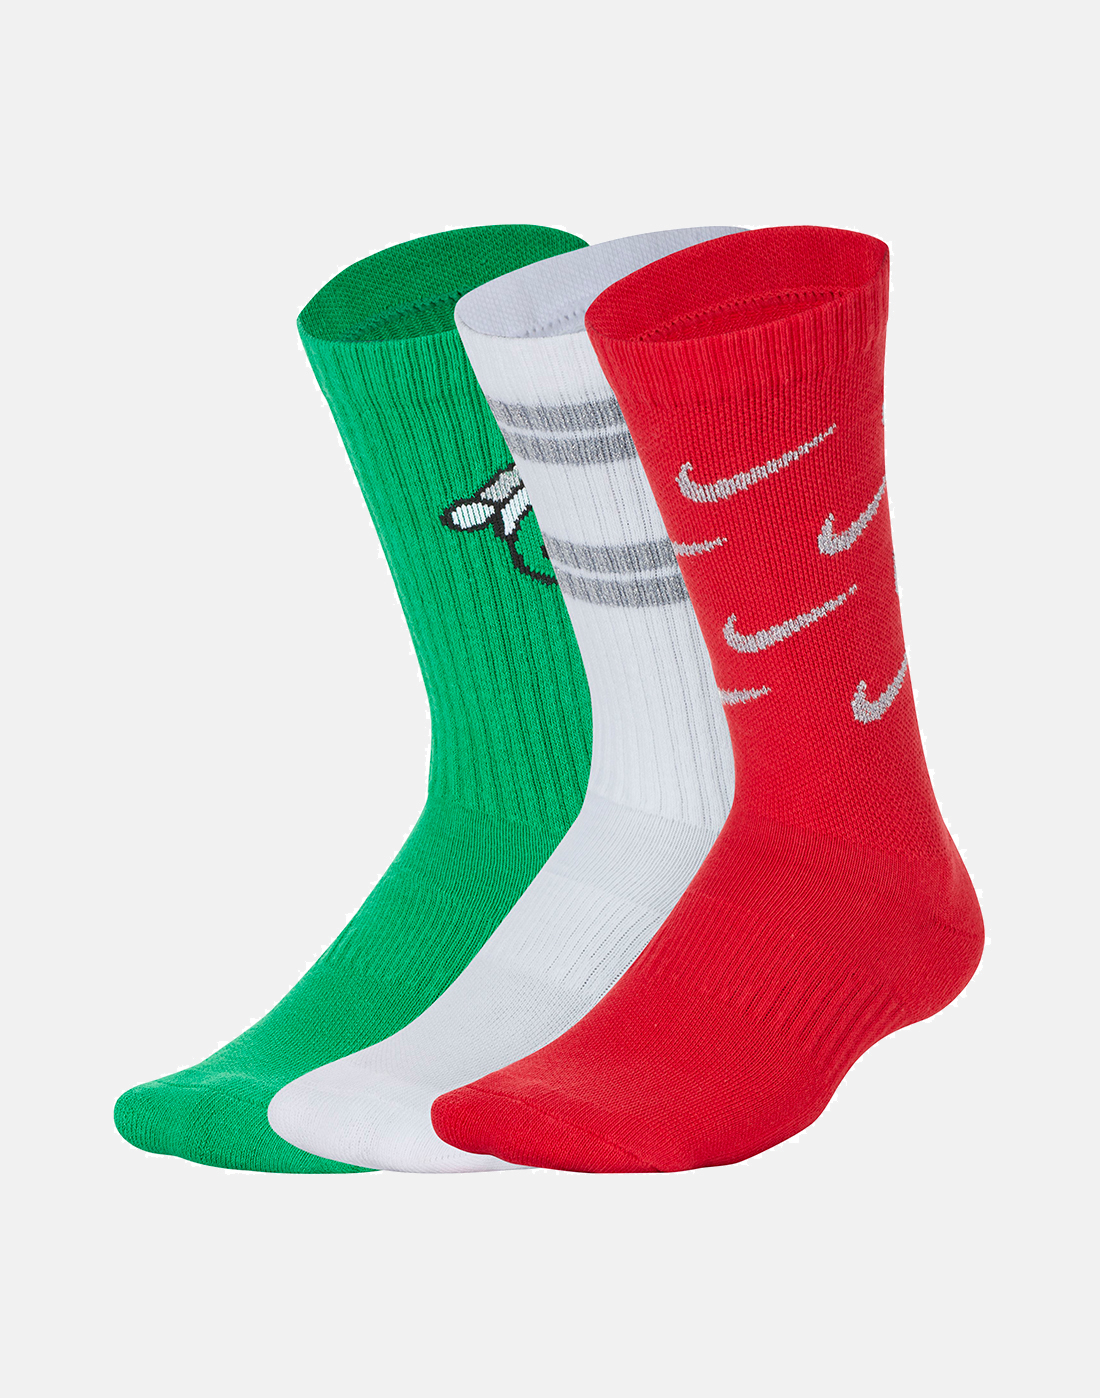 Nike Kids Everyday Cushion Crew 3 Pack Socks - Assorted | Life Style ...